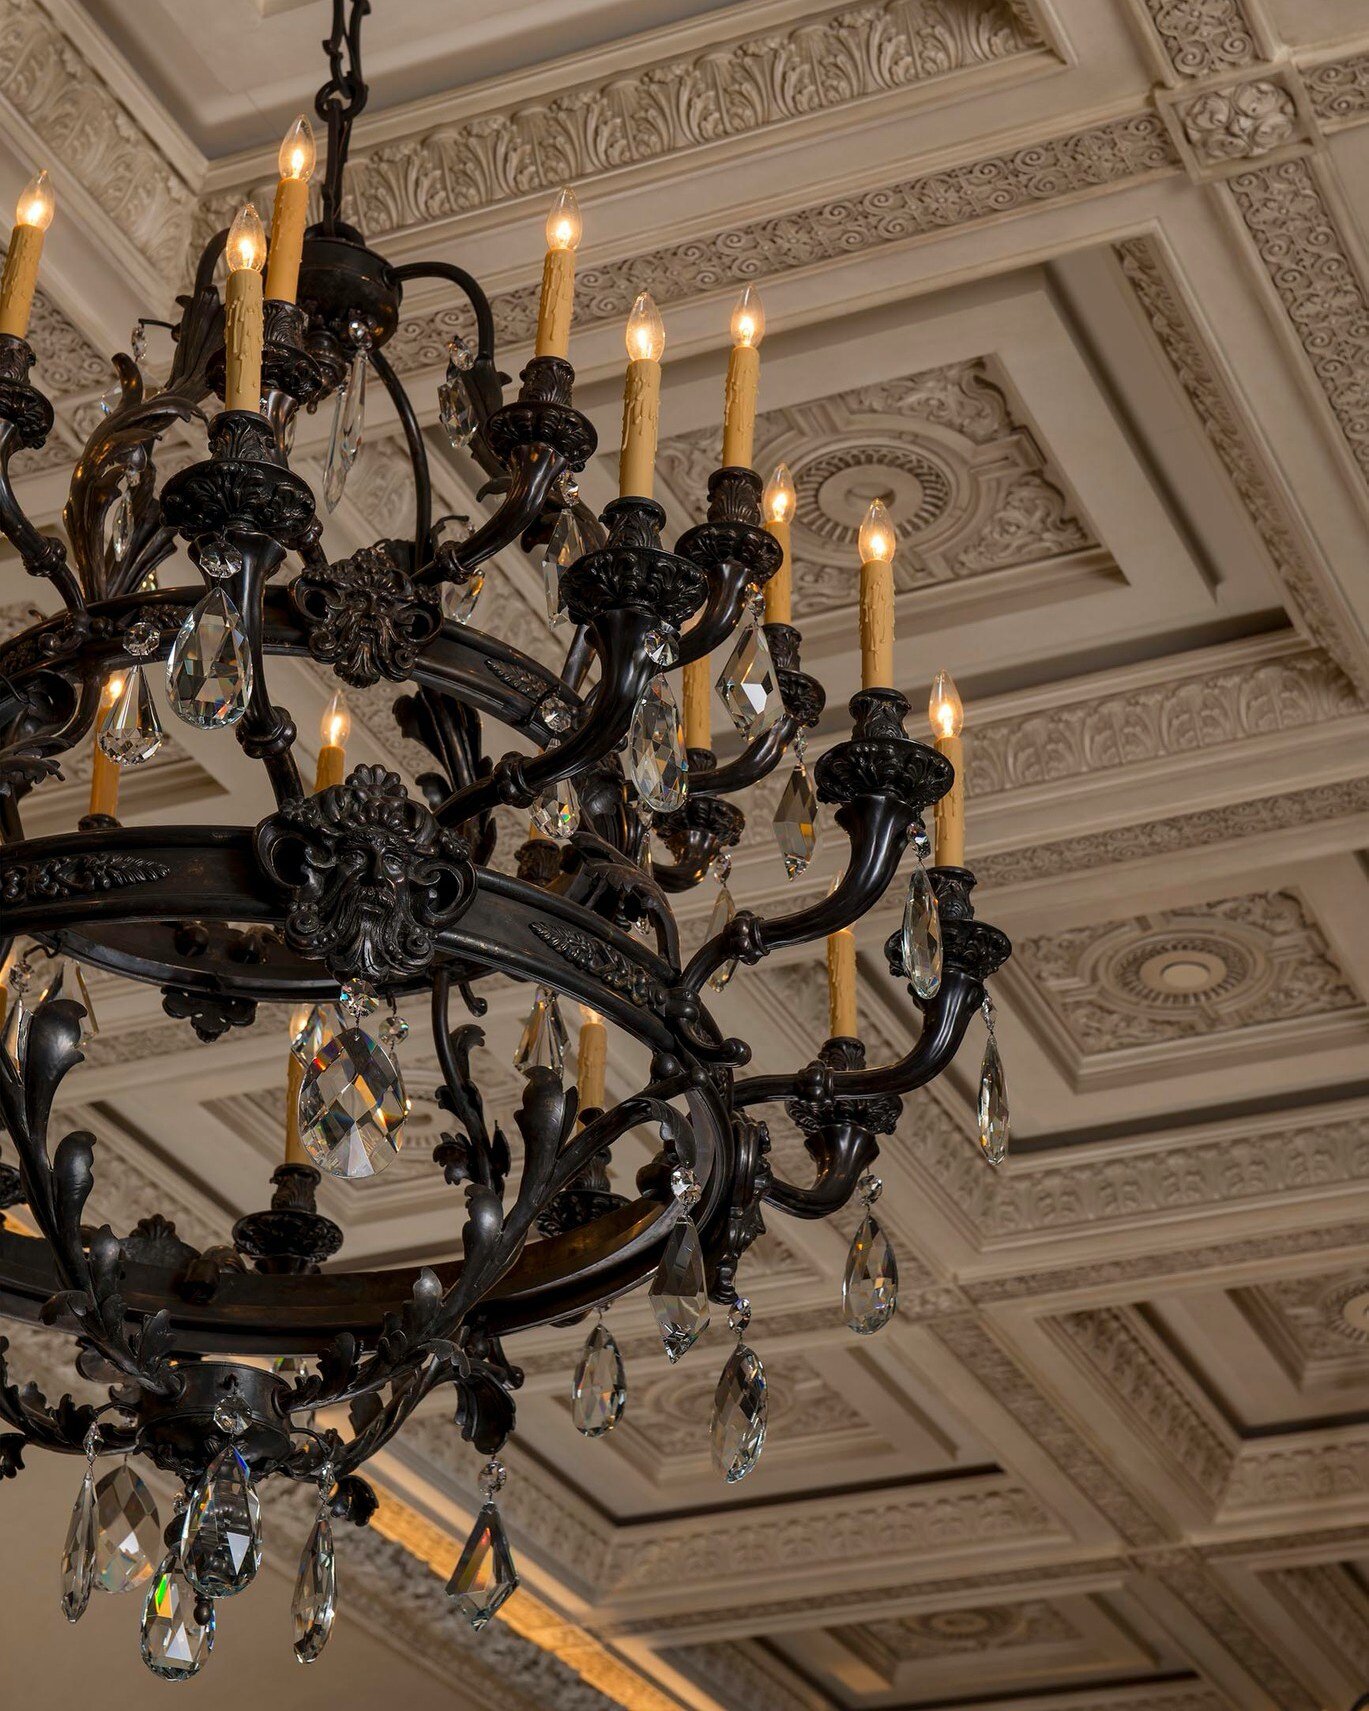 Light the way. ✨
&hellip;
📸: @piassickphoto
.
.
.
#dallasdesigngroup #ddg #dallasinteriordesign #home #luxuryhome #interiordesign #architecture #chandelier #lightingdesign #ceilingdesign #cofferedceilings